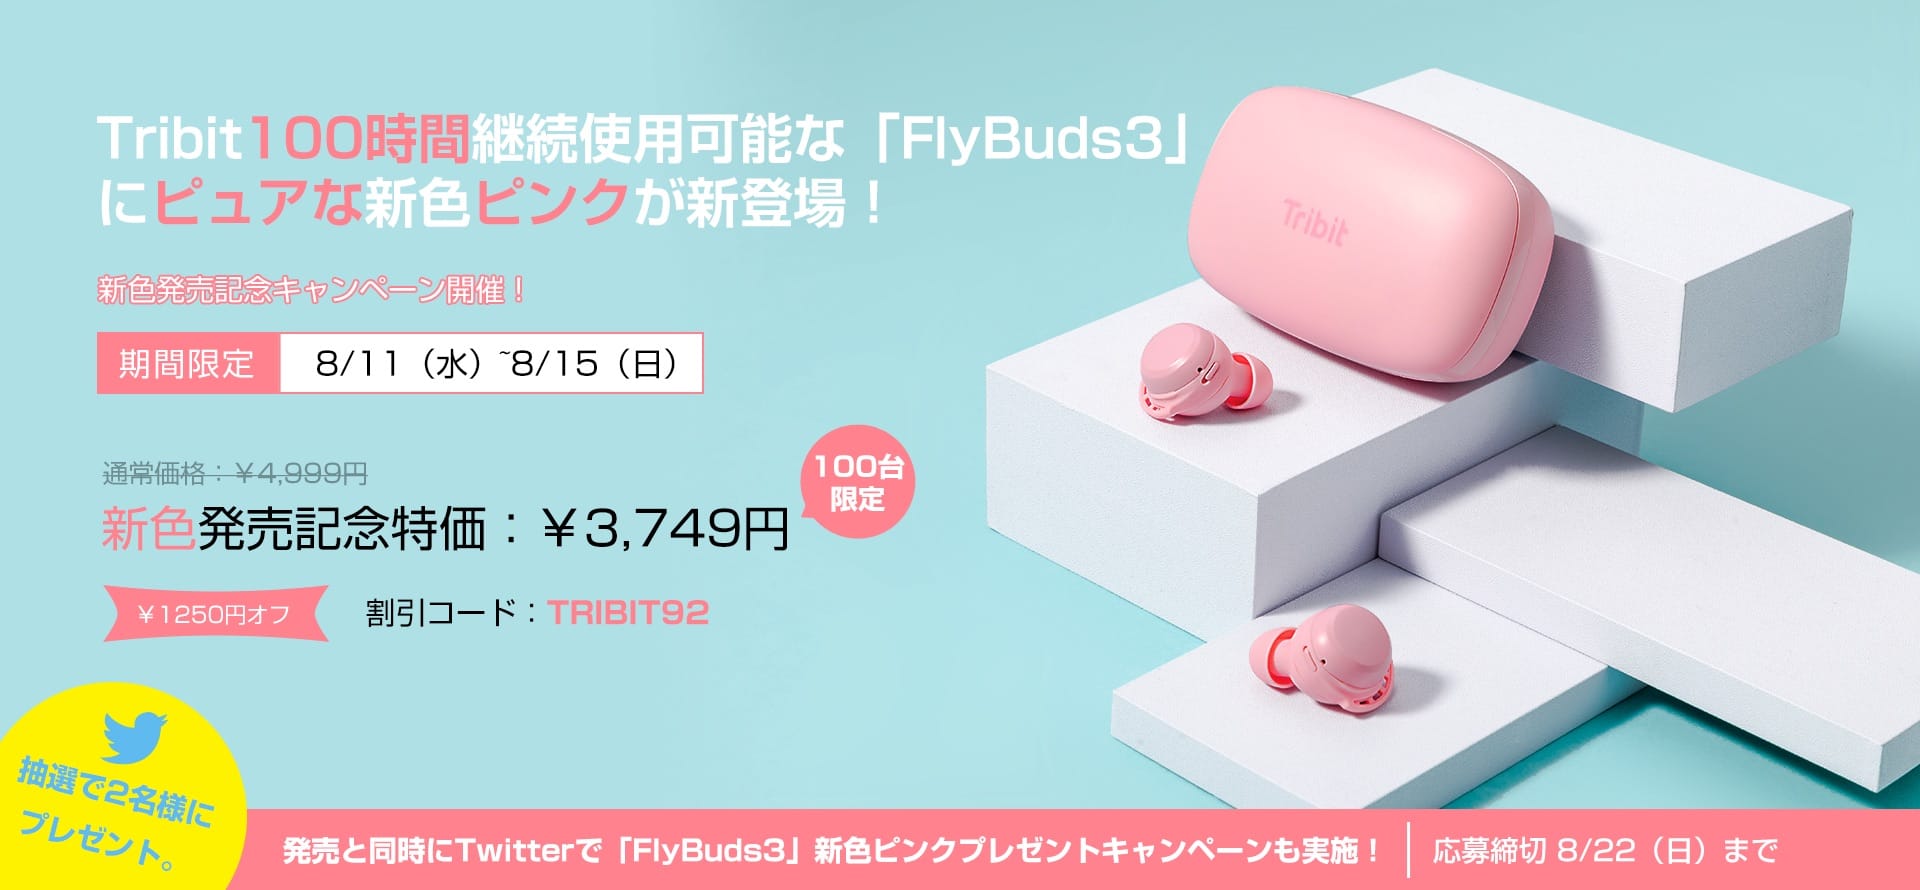 Tribit、完全ワイヤレスイヤフォン「FlyBuds 3」の新色ピンク発売